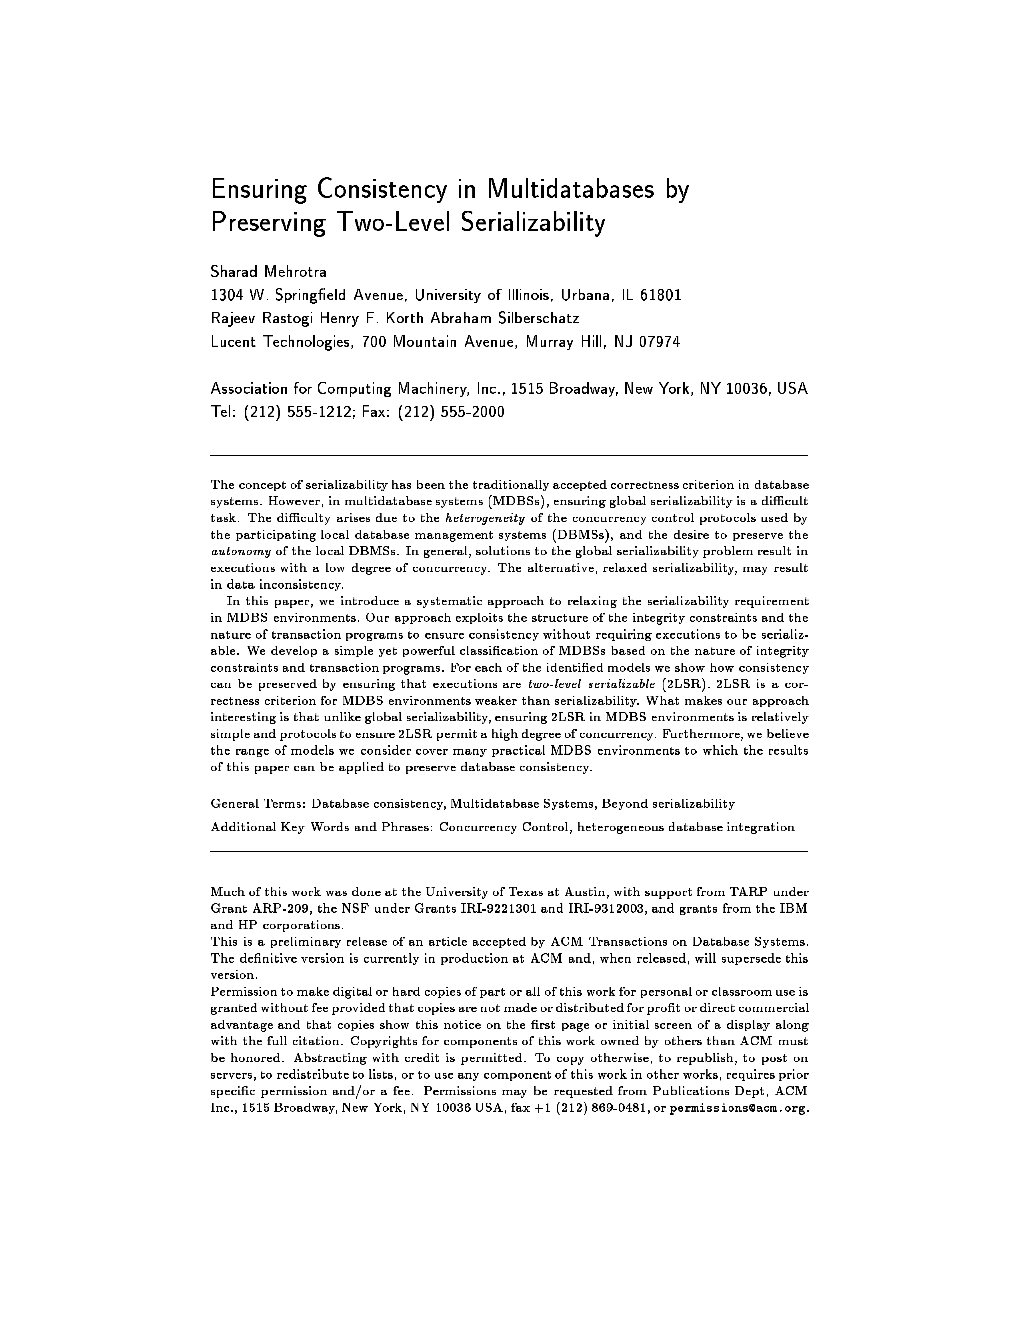 Ensuring Consistency in Multidatabases by Preserving Two